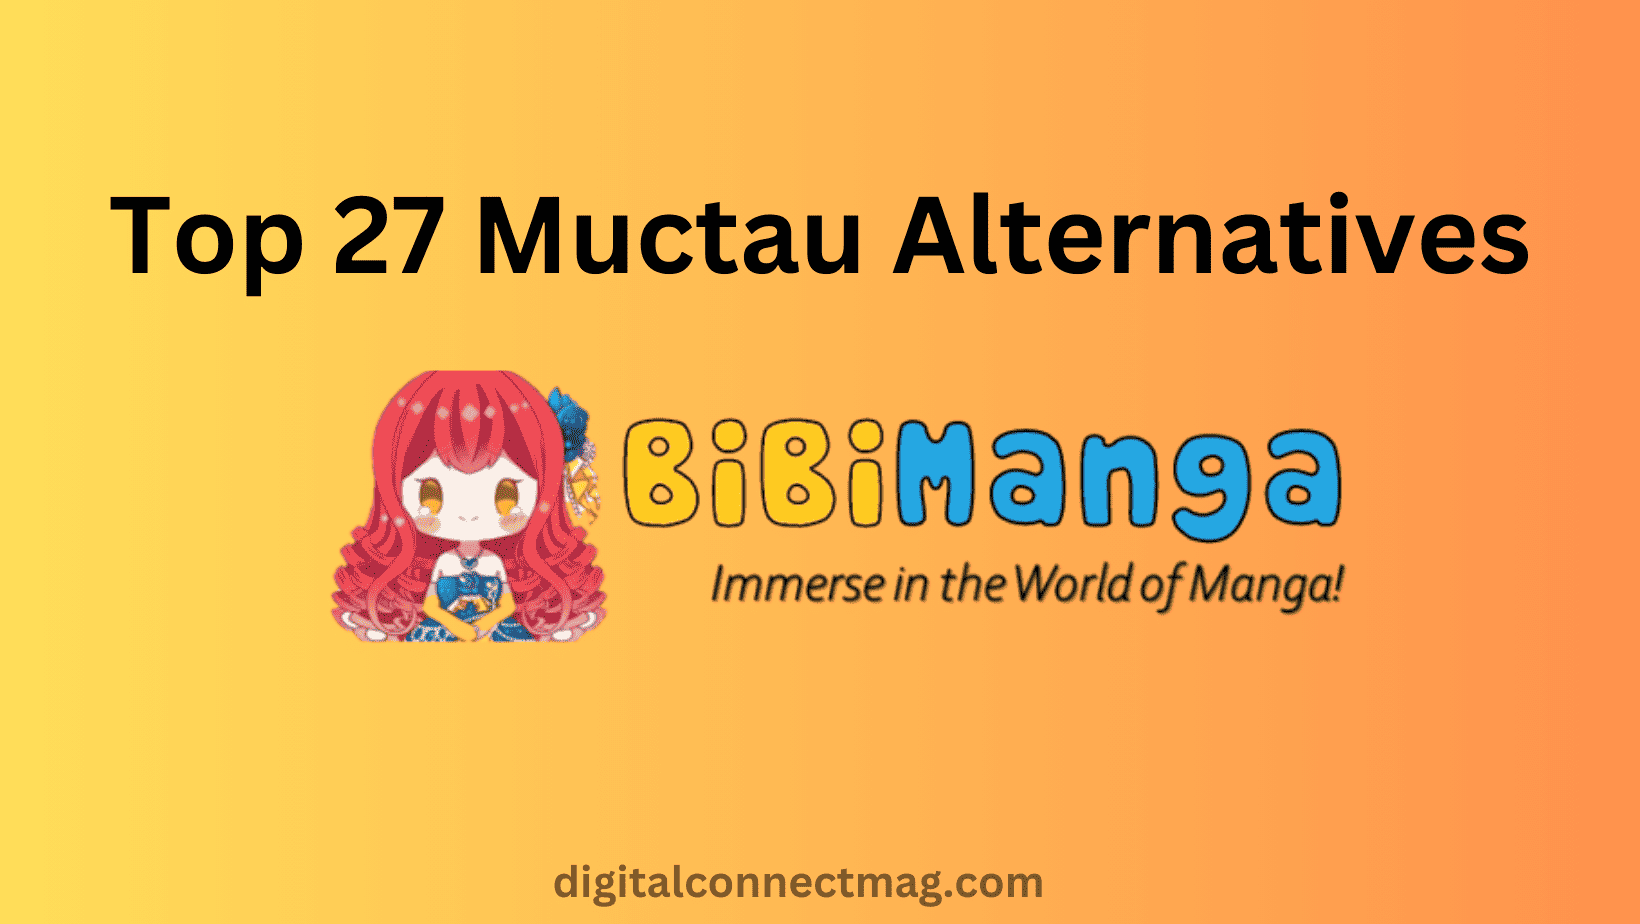 Top 27 Muctau Alternatives